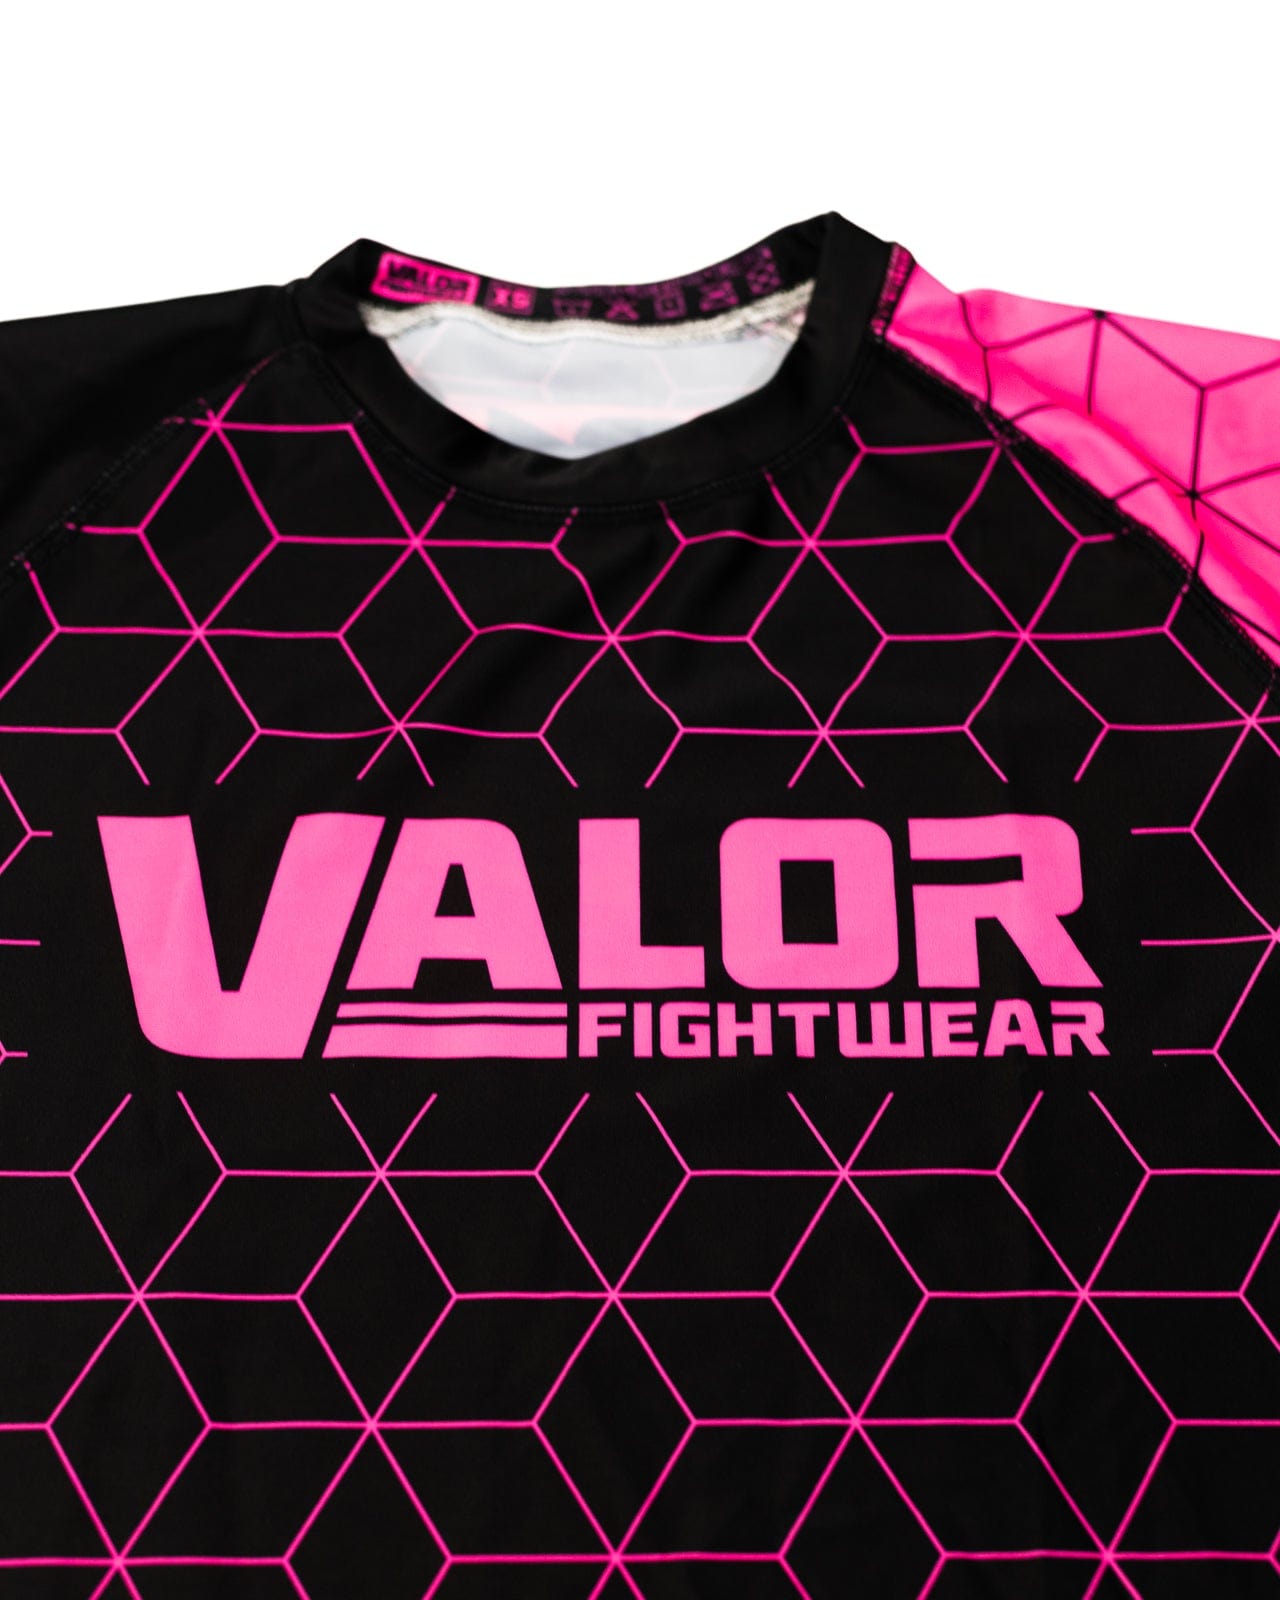 Geometric Design No Gi BJJ/MMA Rash Guard - Pink/Black - Valor Fightwear Adult Rashguard Valor Fightwear   